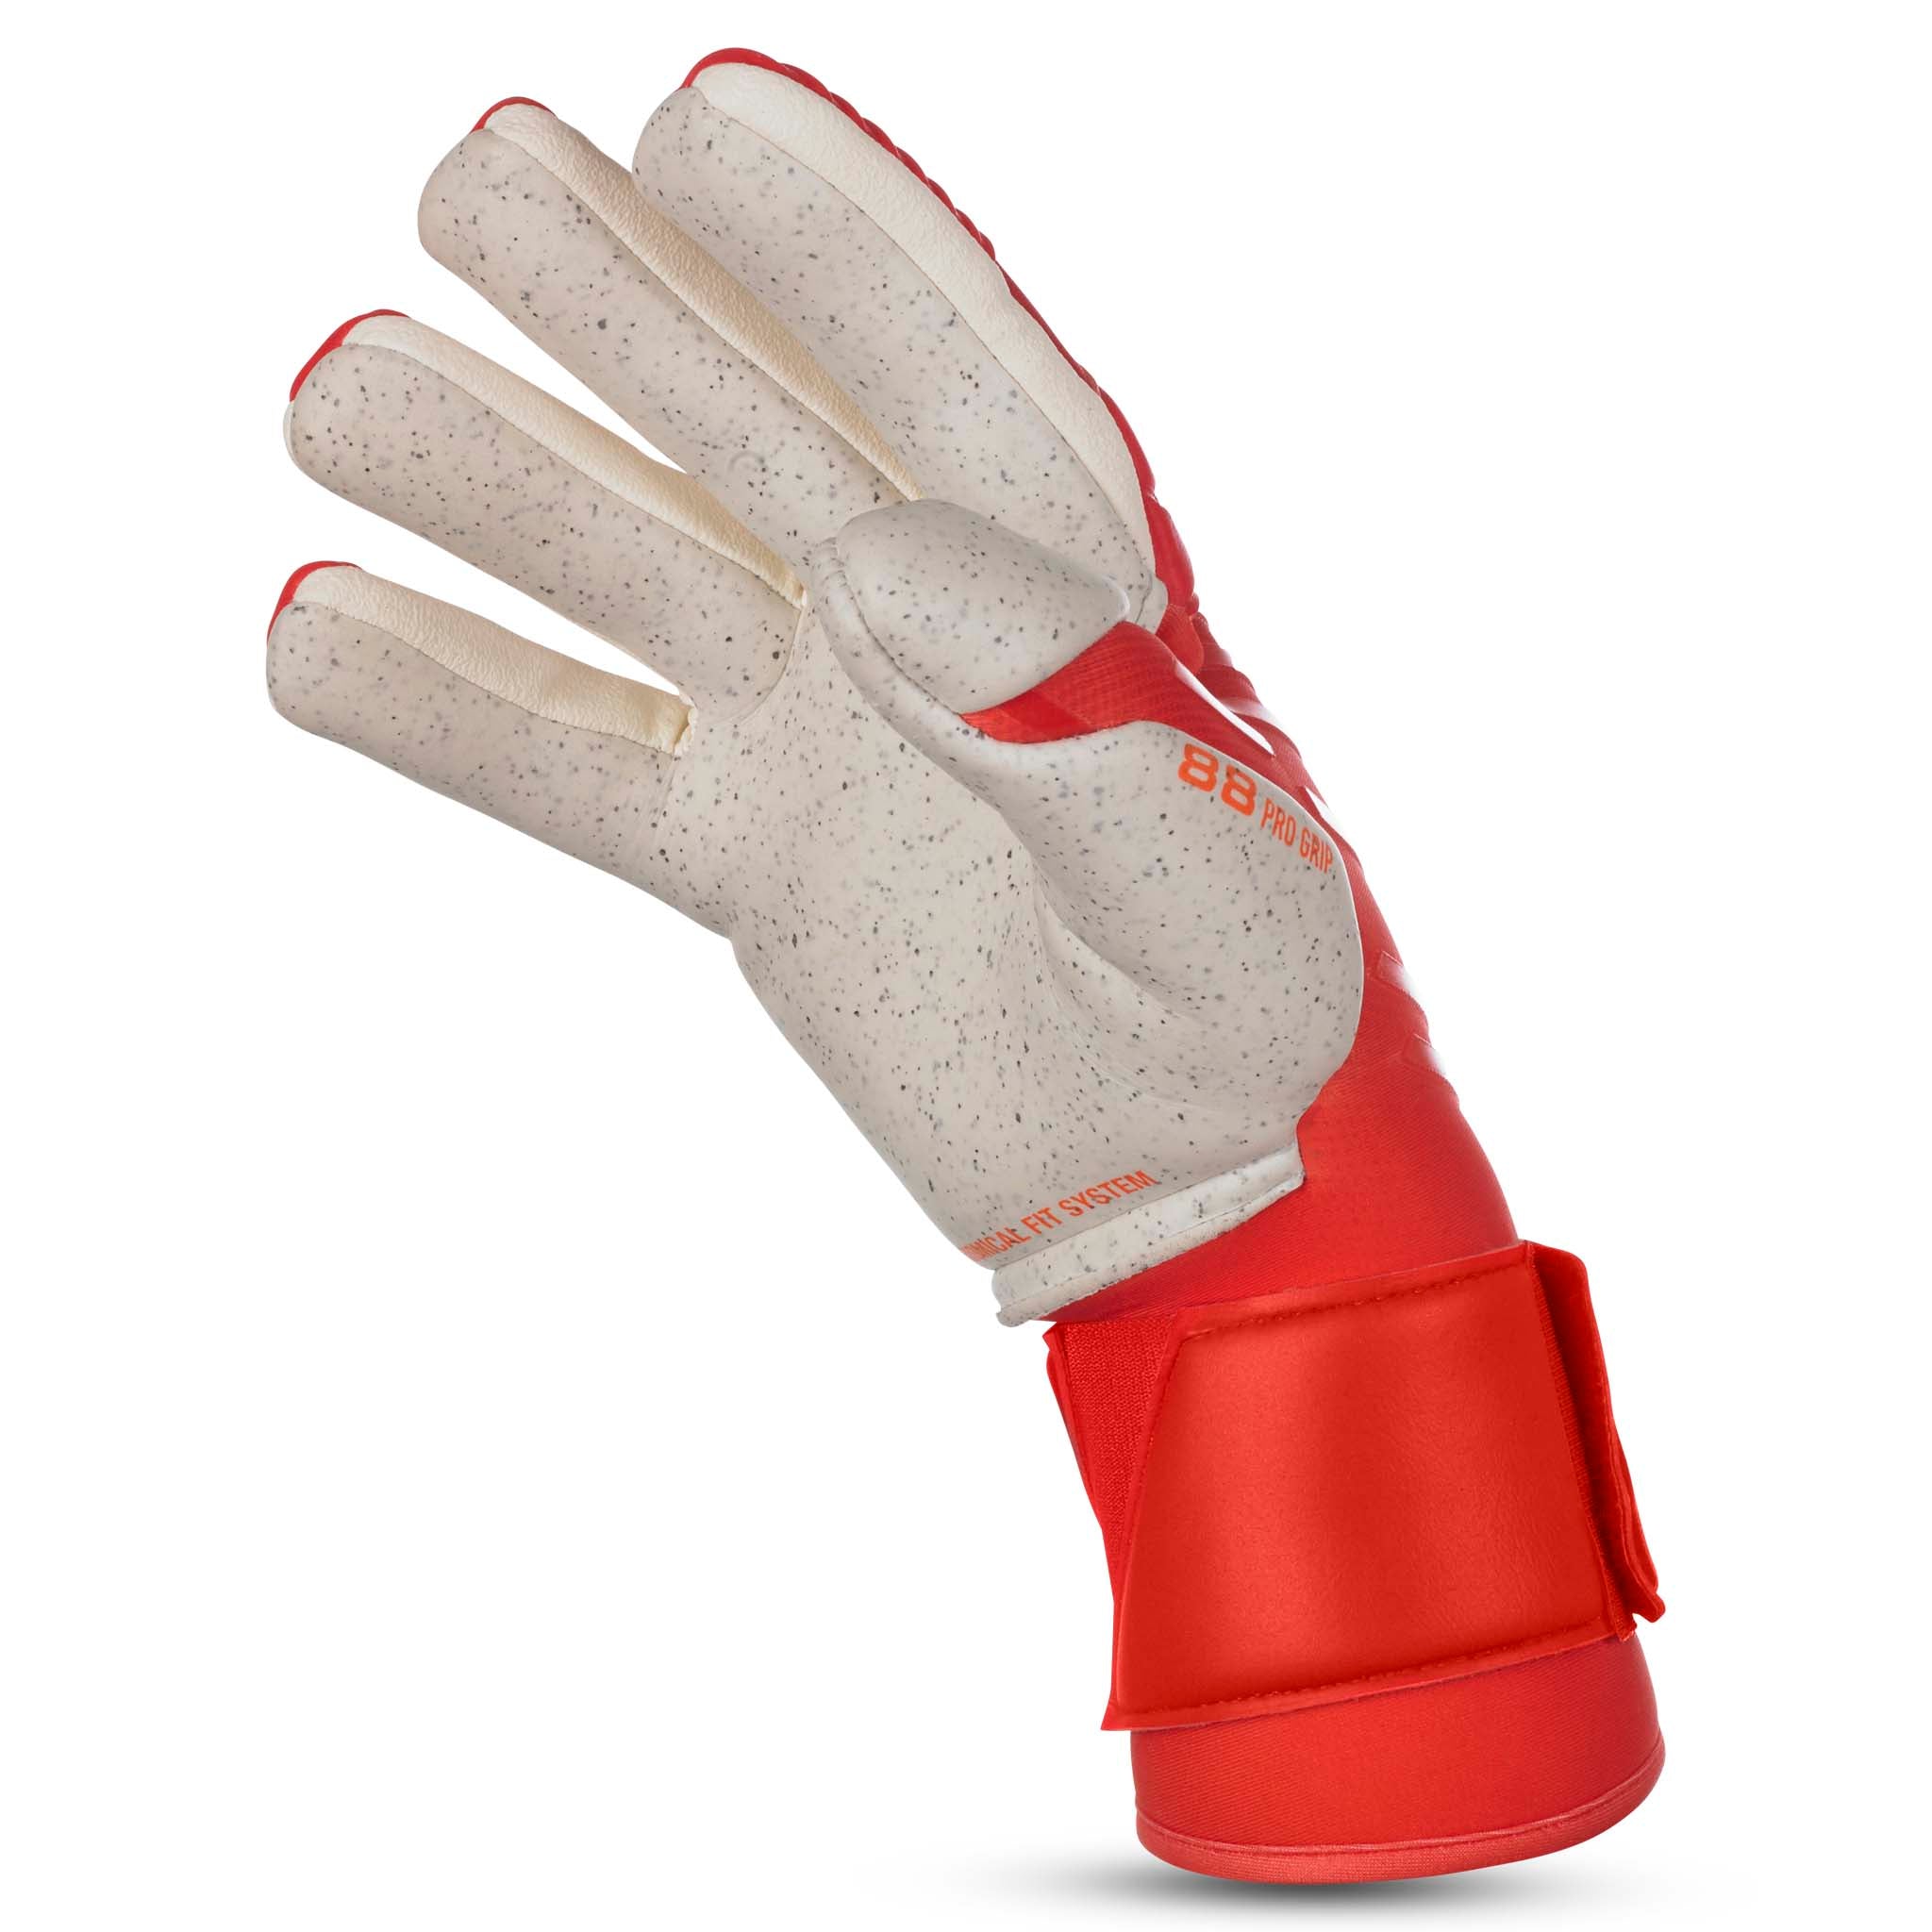 Goalkeeper gloves - 88 Pro Grip #colour_red/white